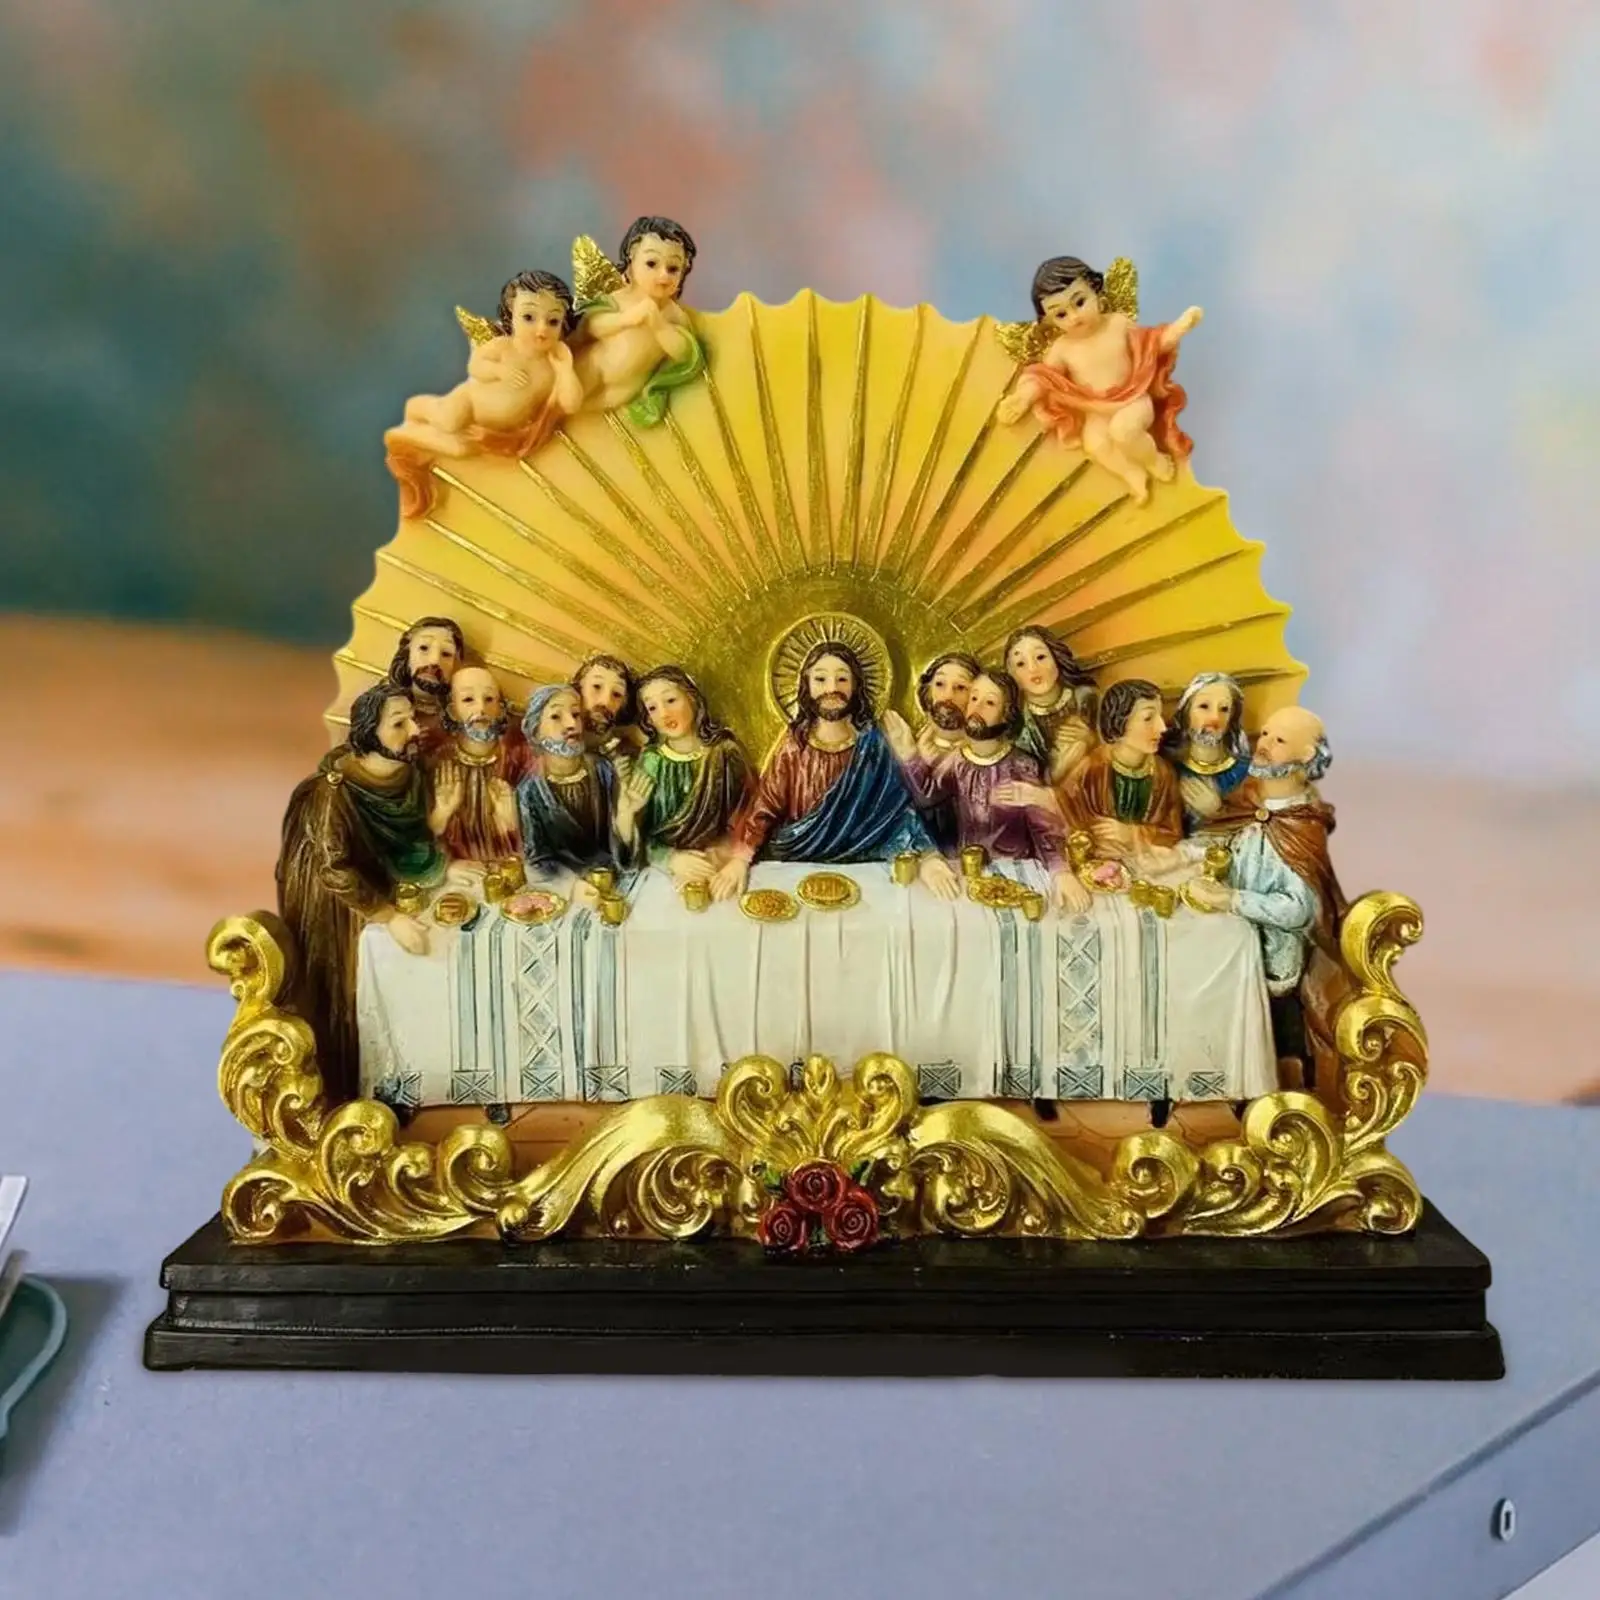 Last Supper Figures Christian Catholic Figurine Decorative Religious Statue for Bedroom Living Room Office Religious Gift Decor